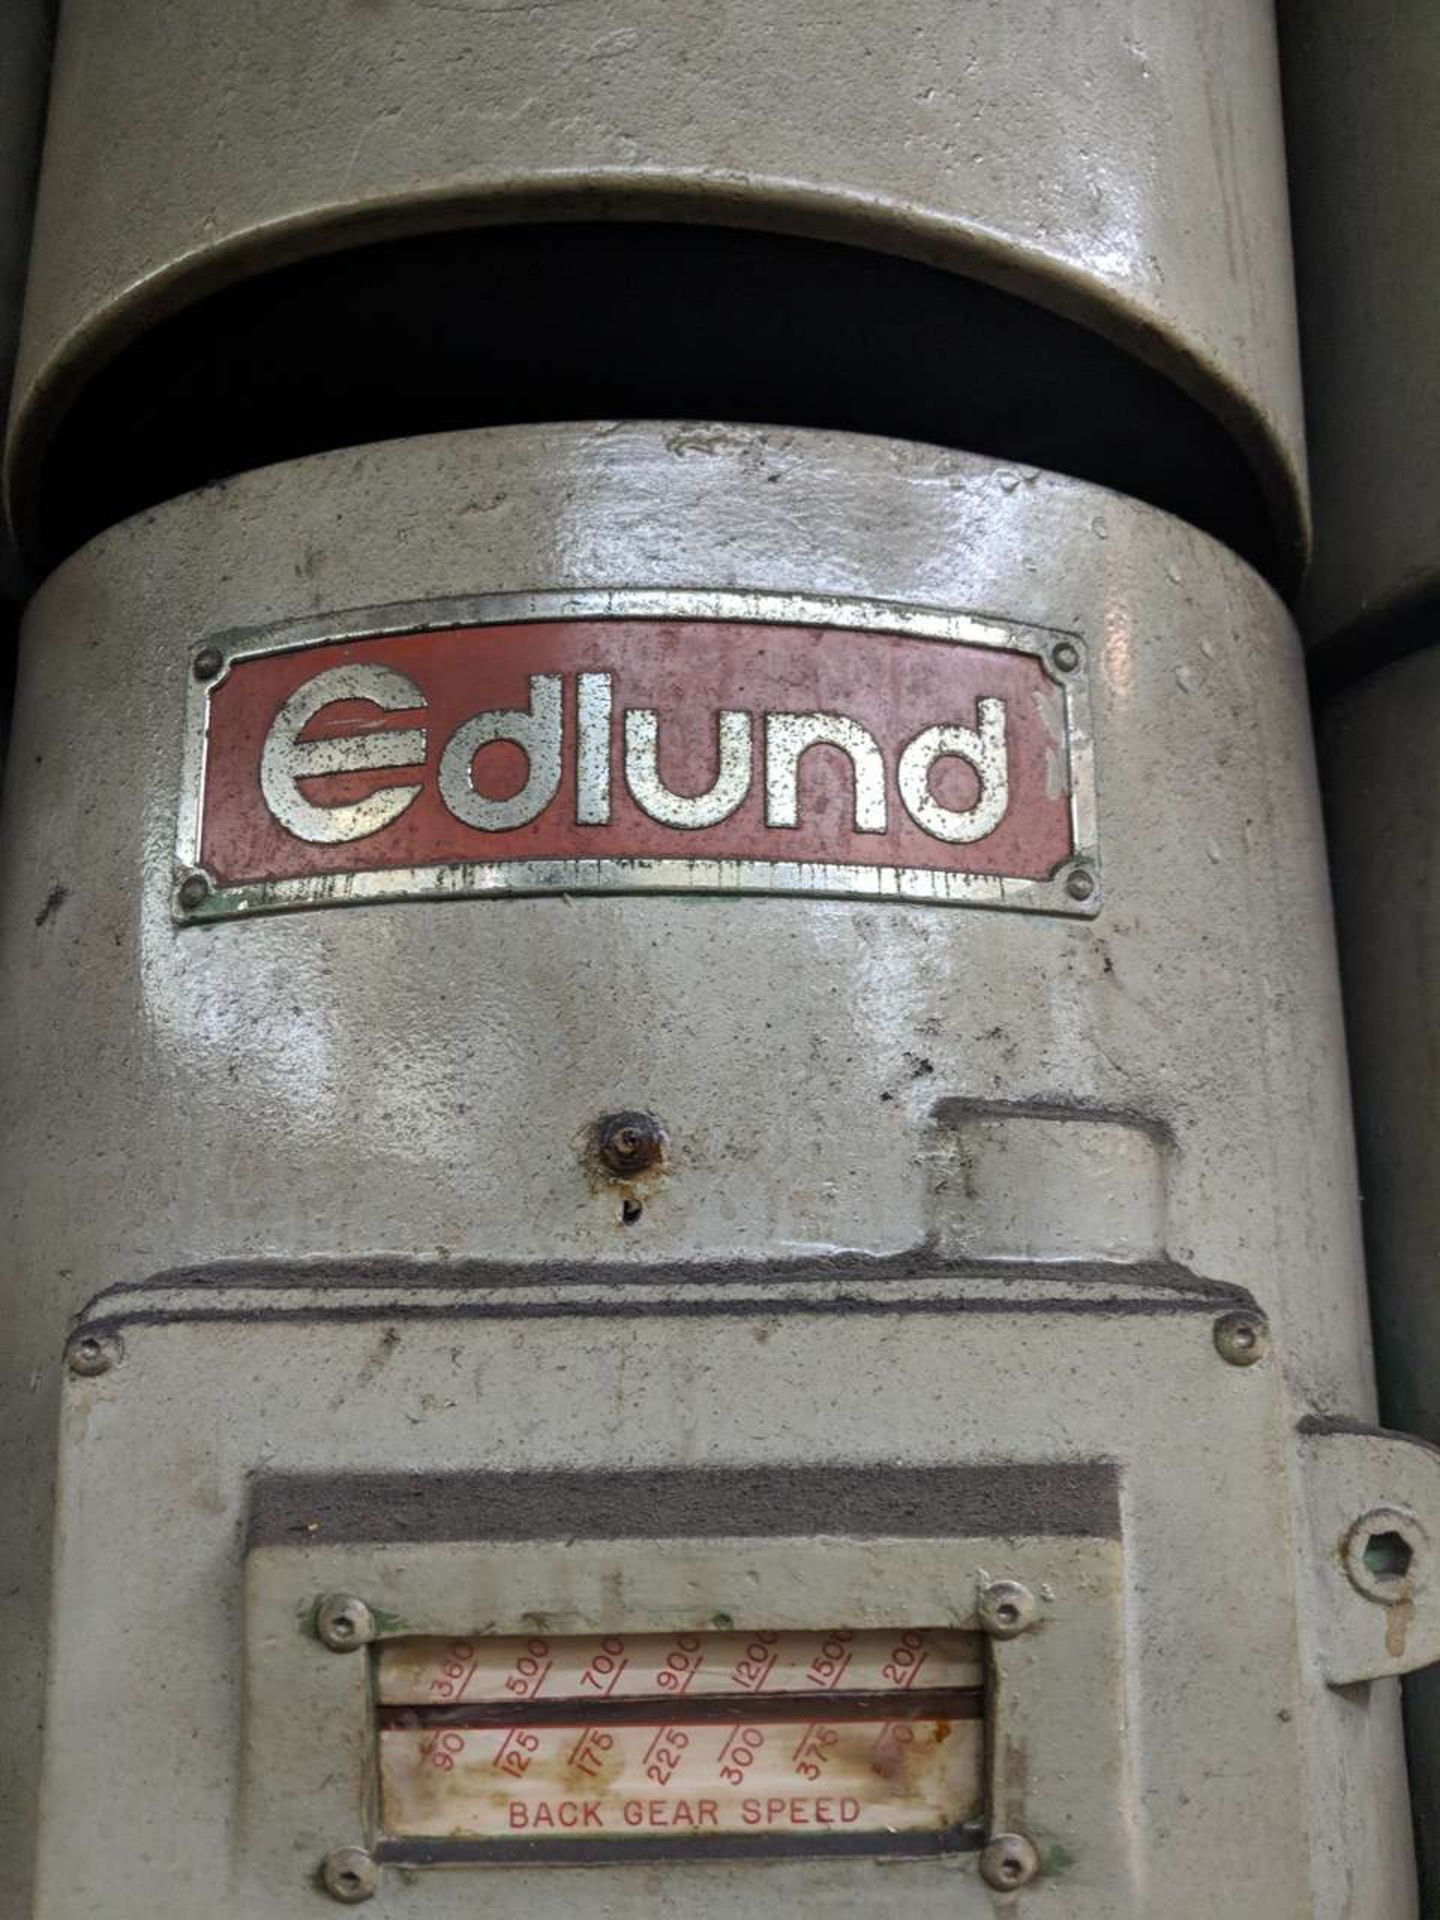 Edlund 4F12 4 Spindle Platform Drill - Image 3 of 3